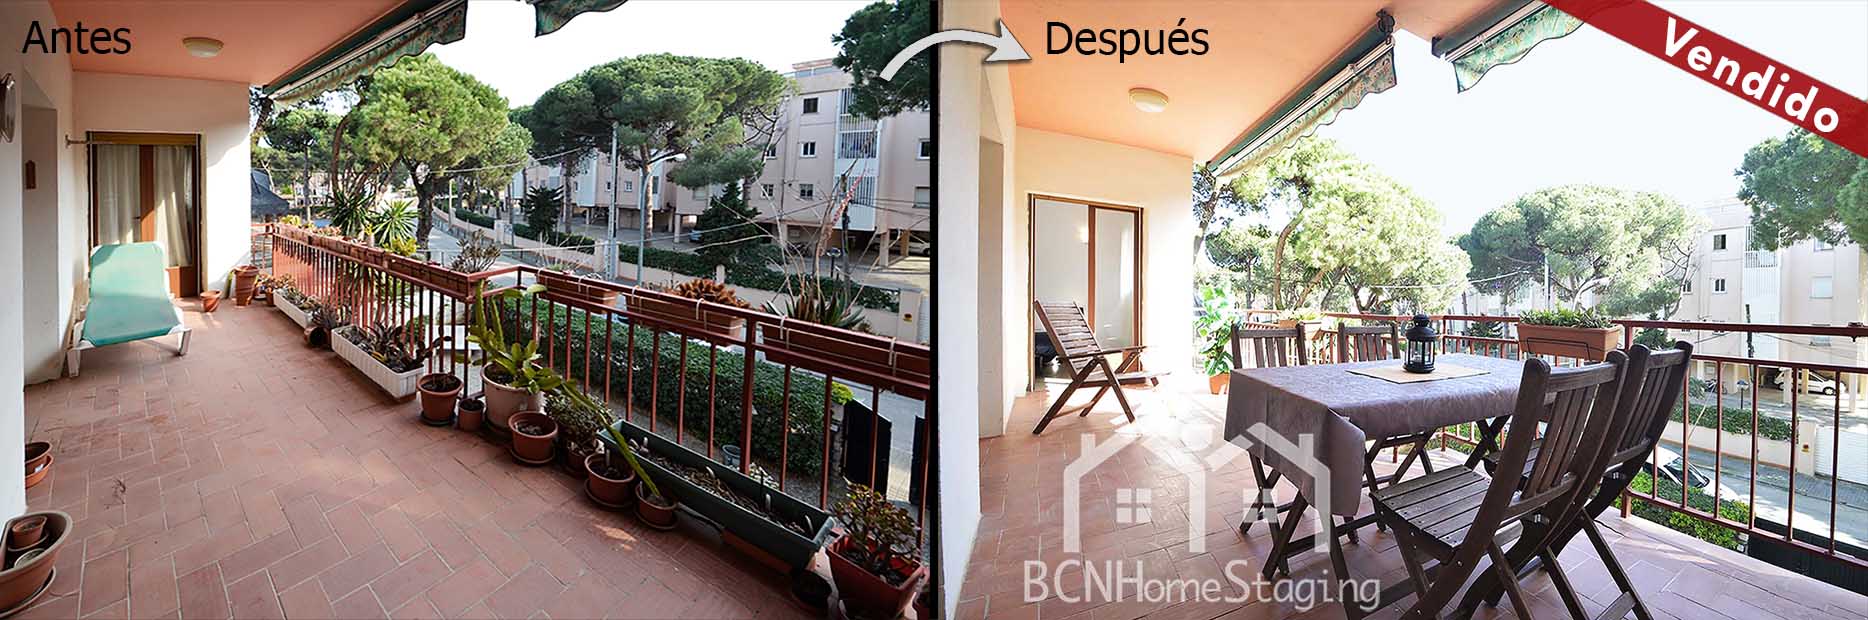 home-staging-barcelona-exterior-balcon-antes-despues